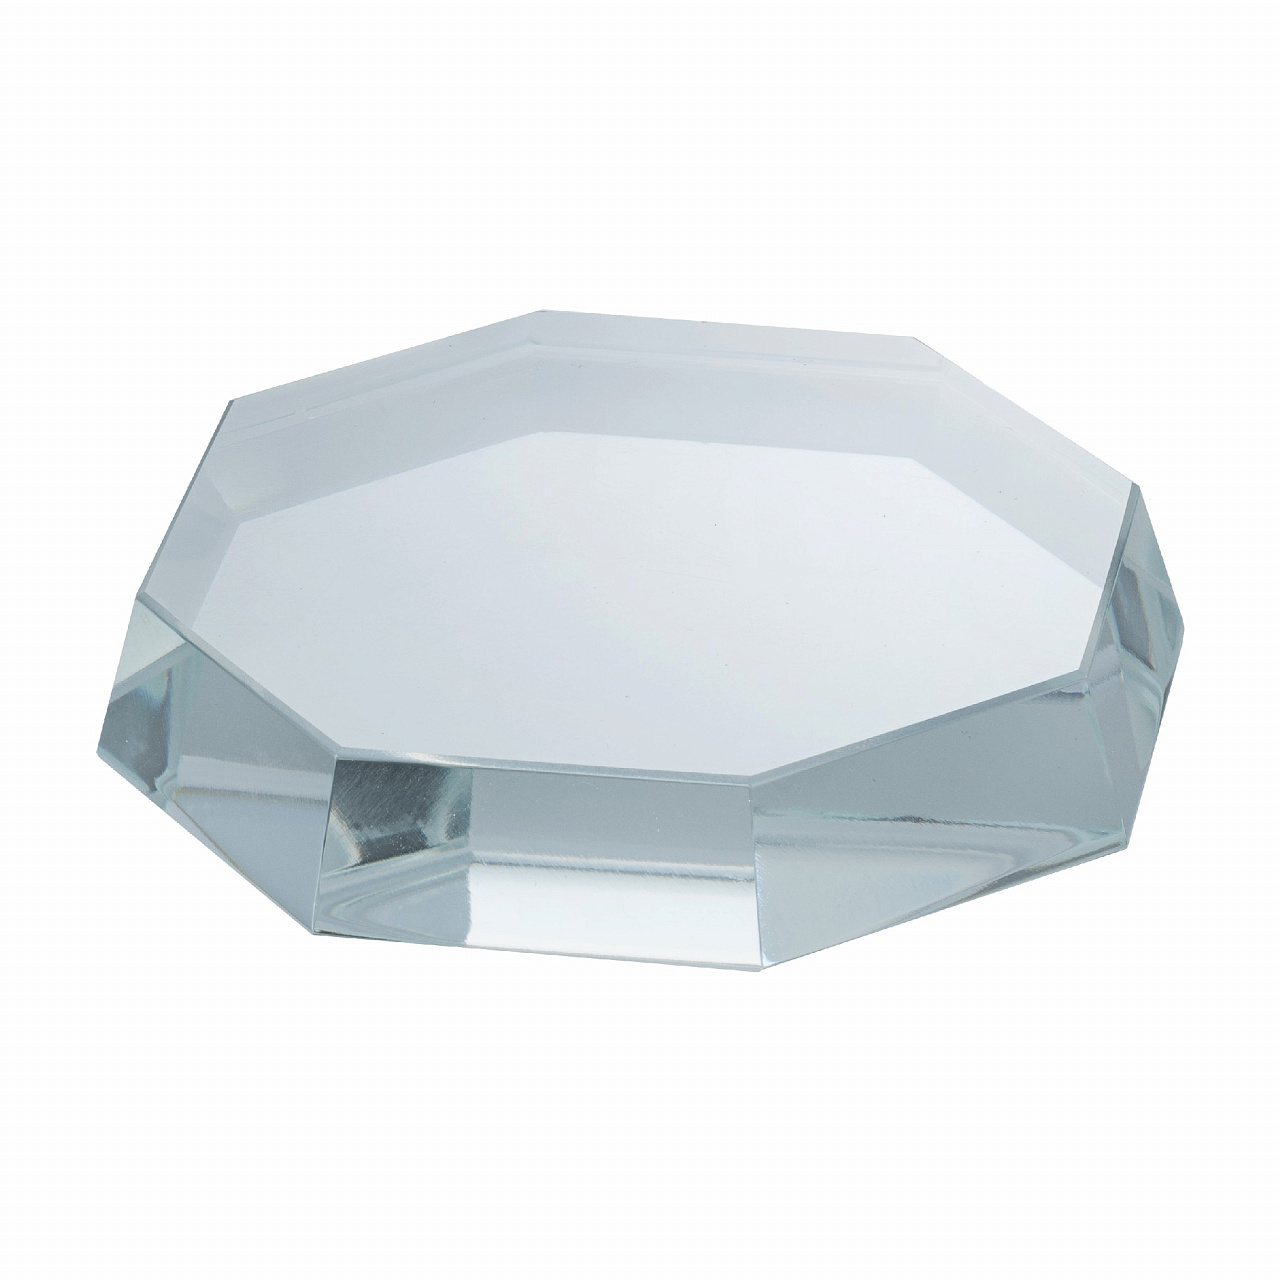 стопка стекло 50 мл осз кристалл 05с1241 Кристалл для клея диаметр 50 мм